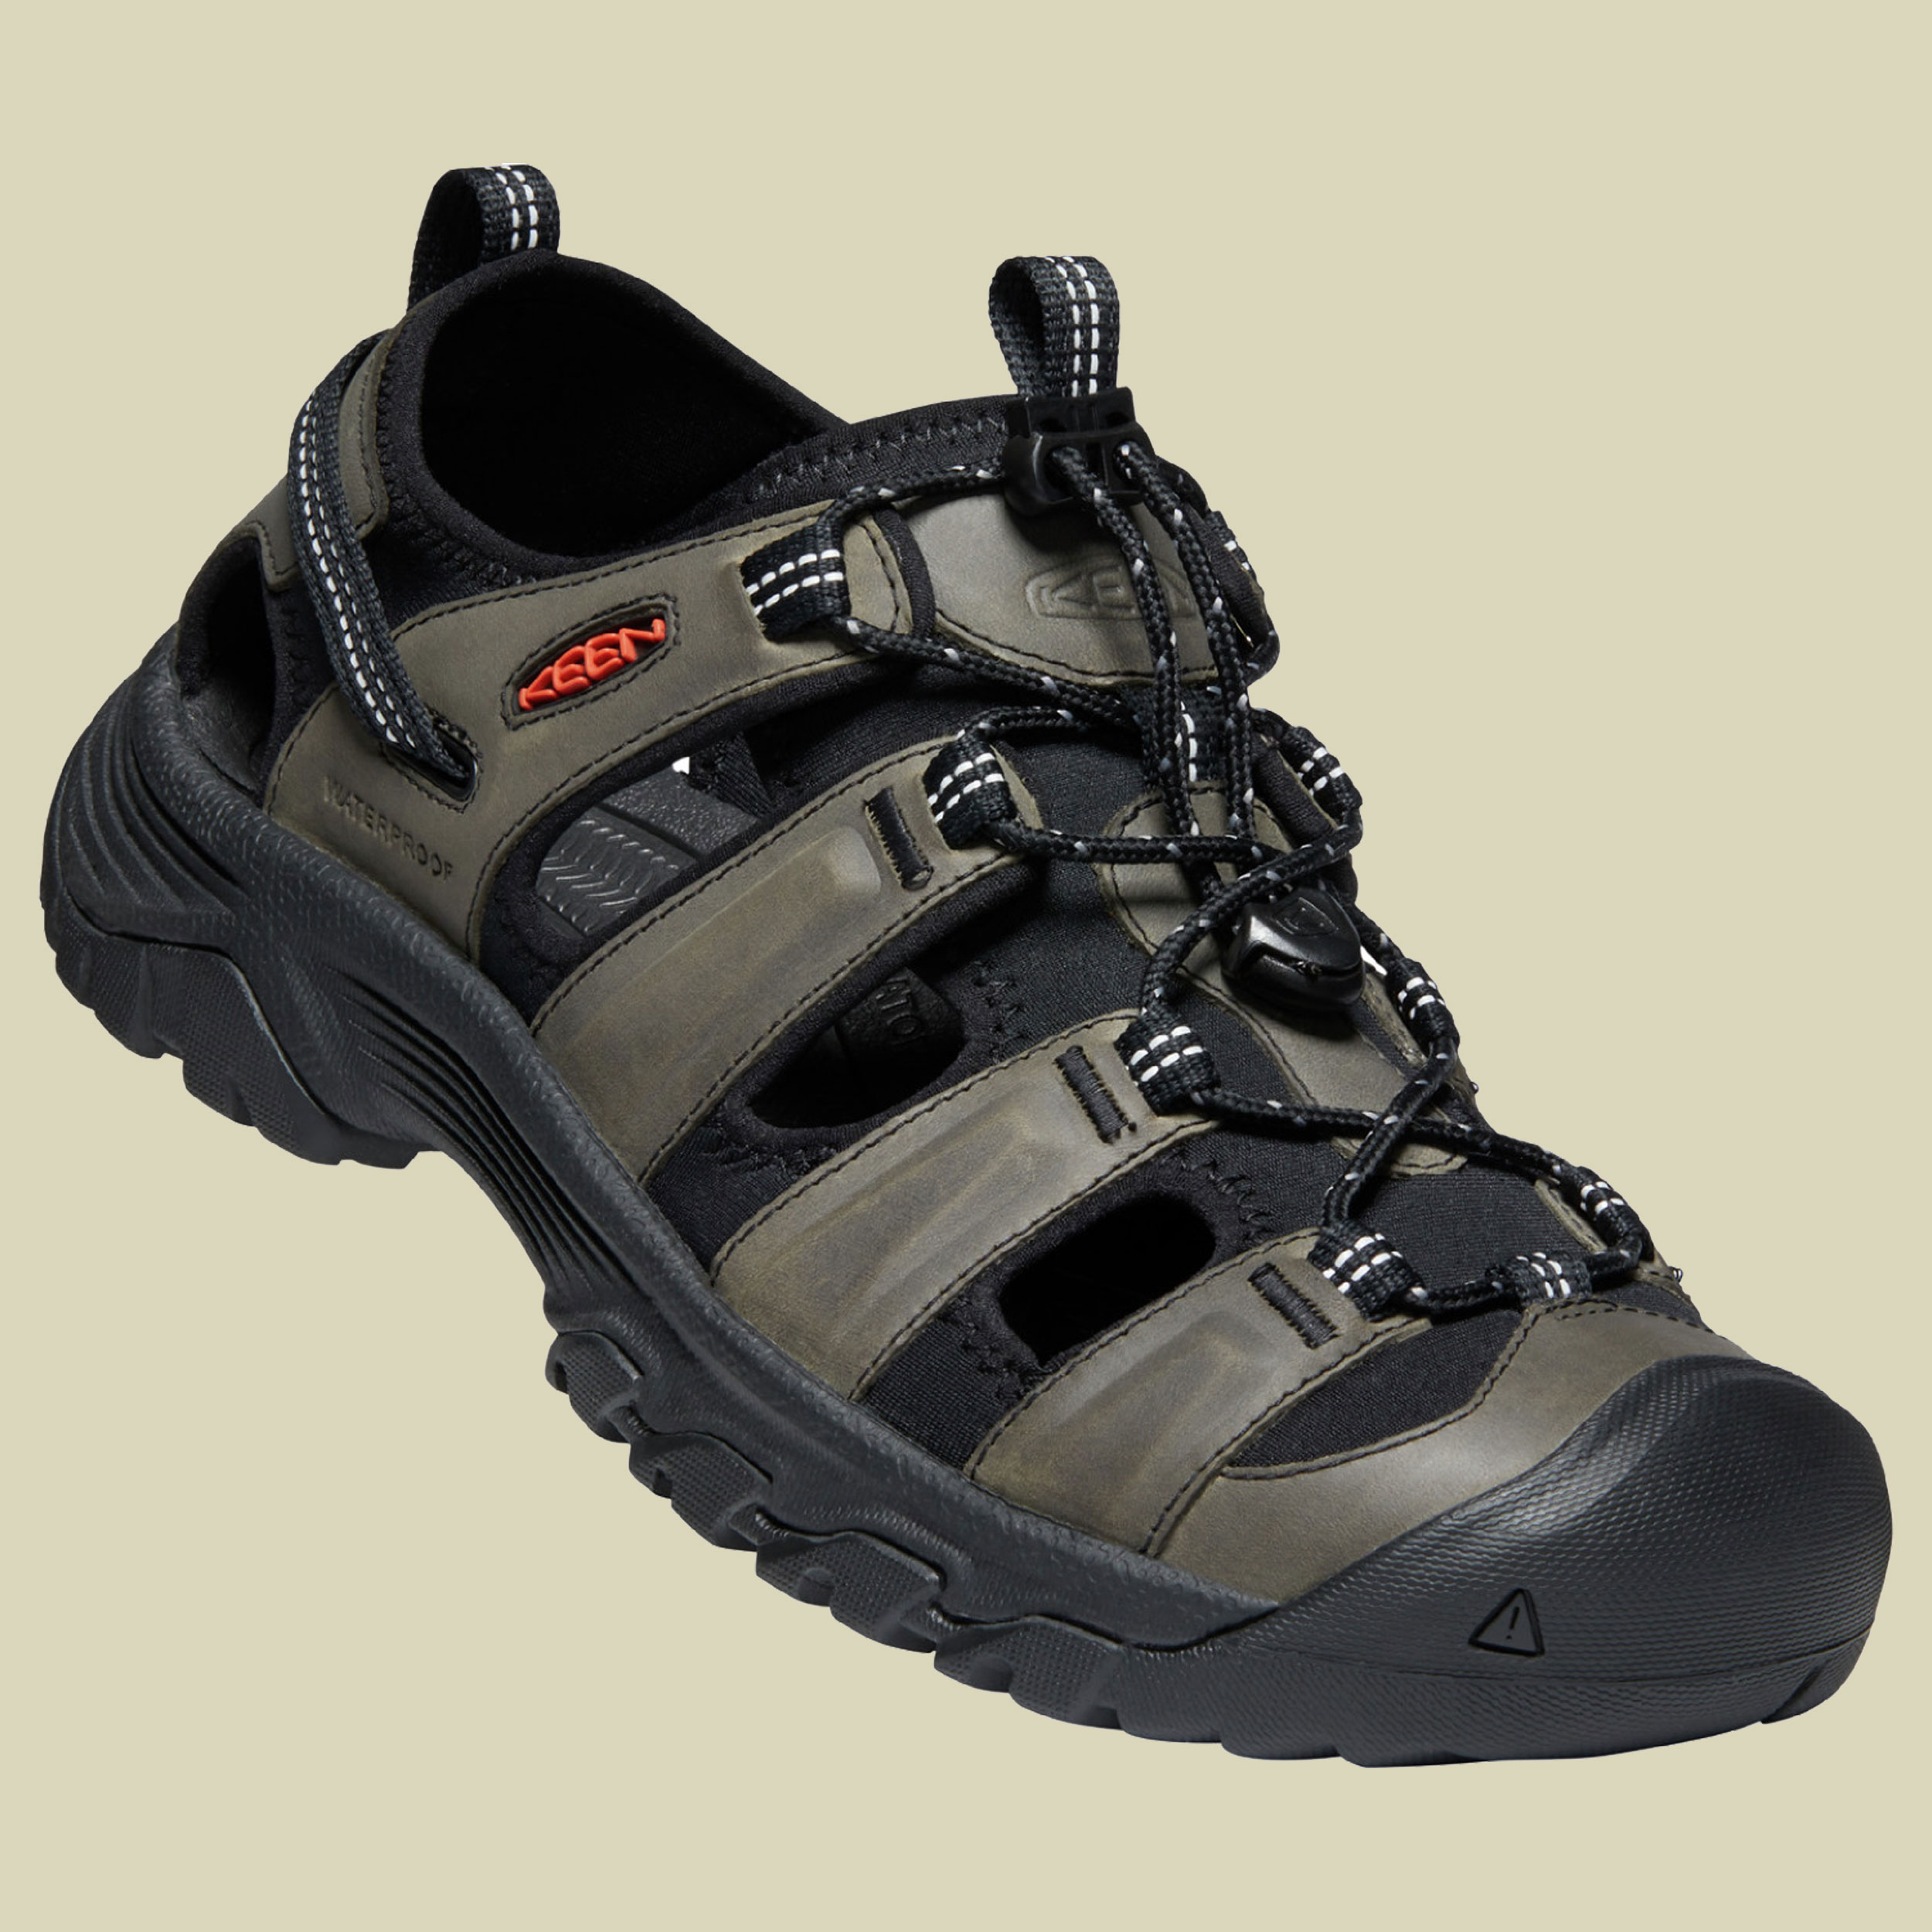 Targhee III Sandal Men Größe UK 9,5 Farbe grey/black